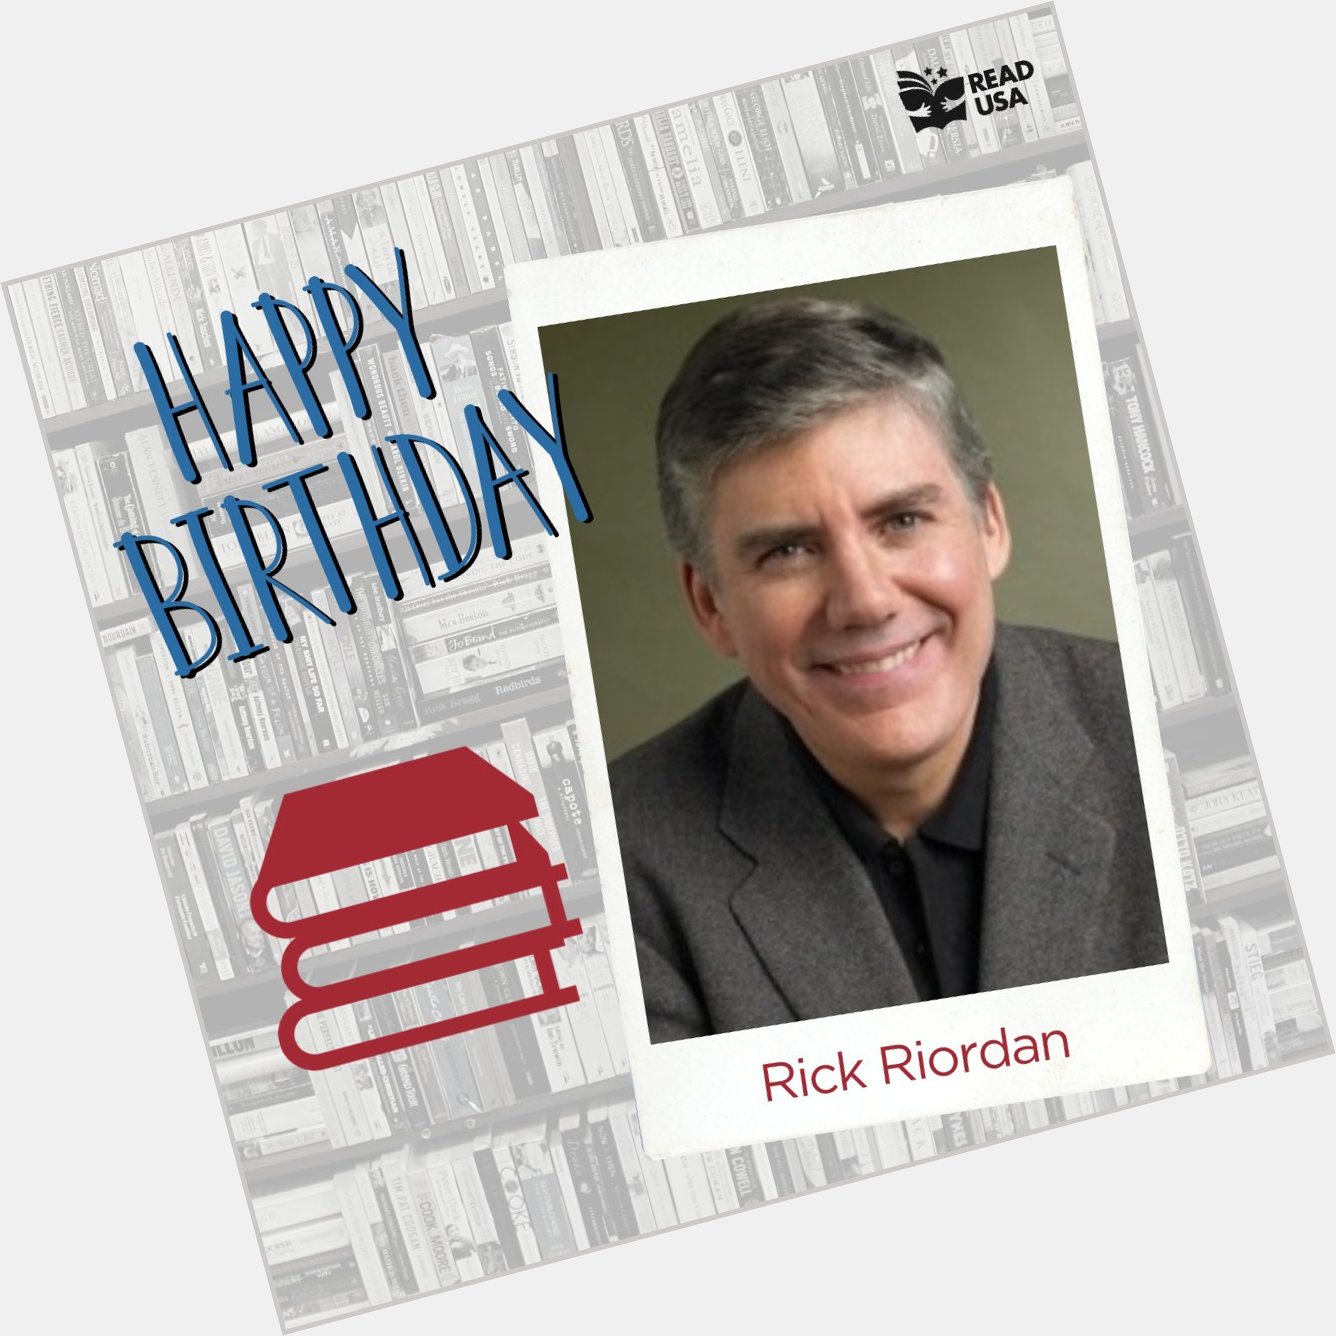 Happy Birthday Rick Riordan!  